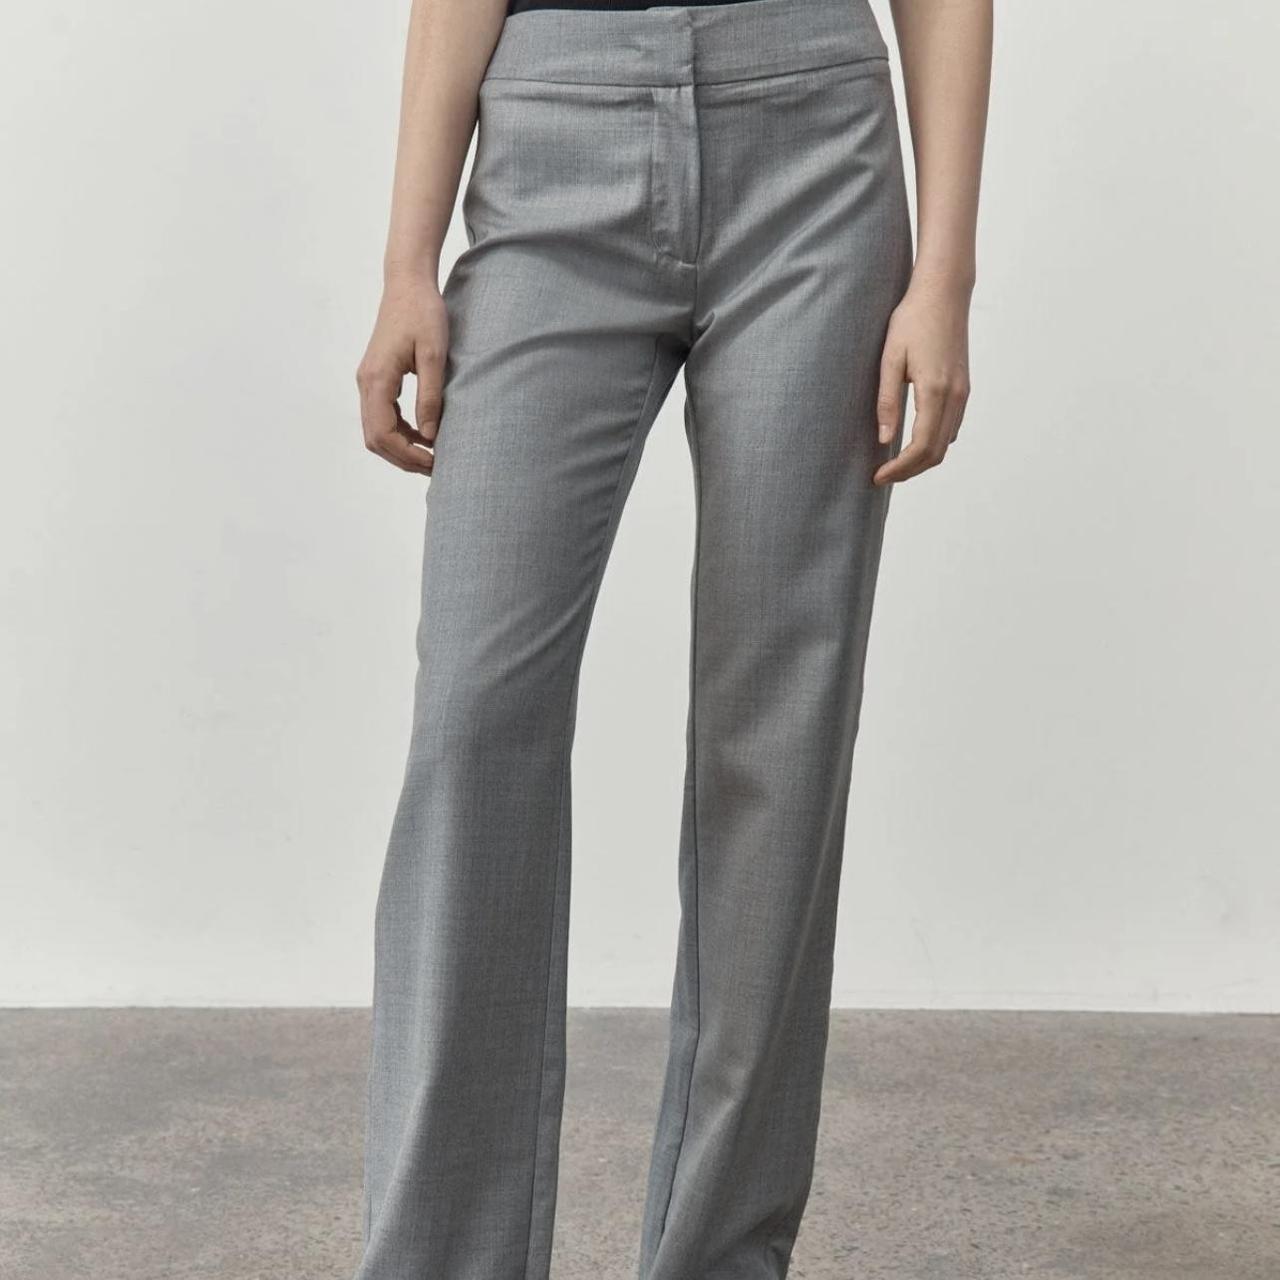 St Agni mid rise grey pants Size medium Brand... - Depop